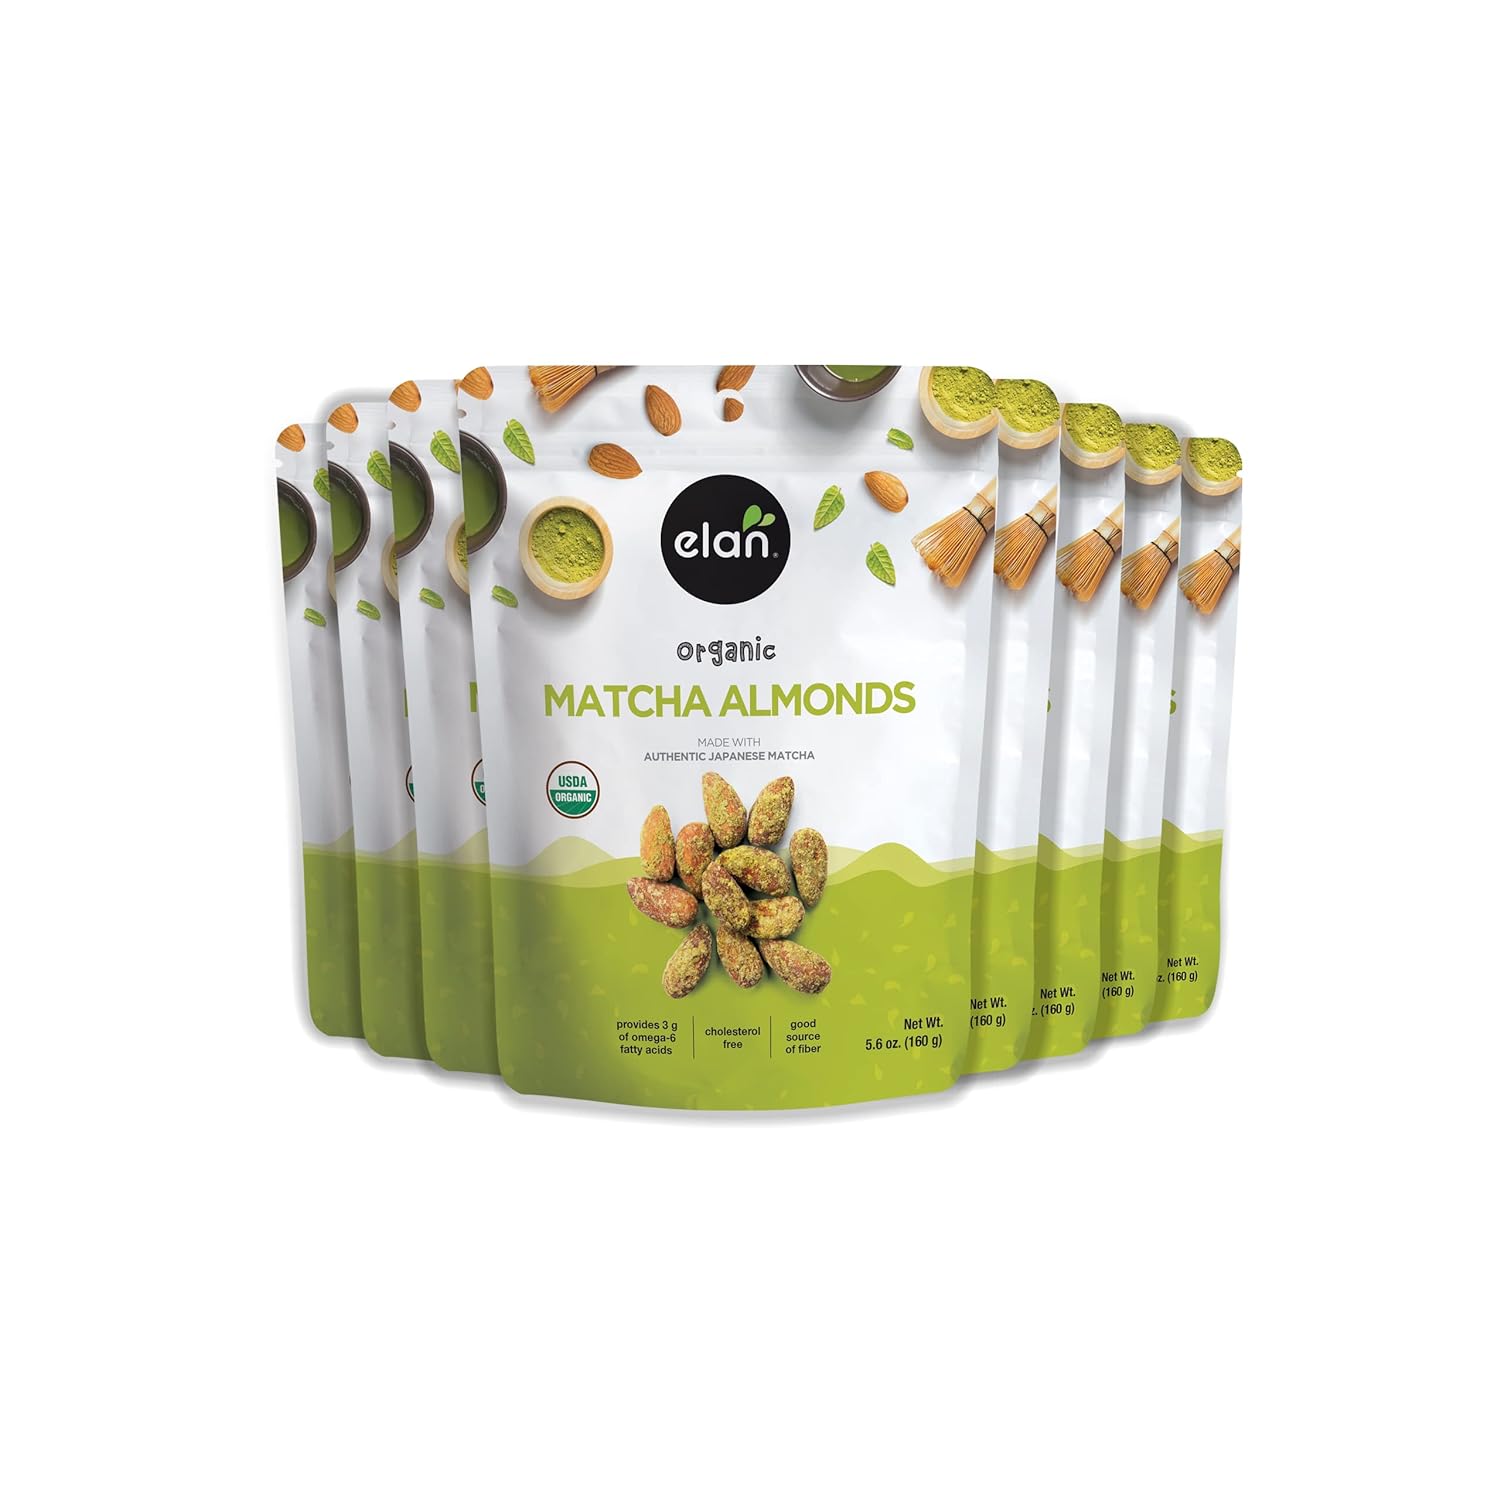 Elan Organic Matcha Almonds, Non-GMO, Gluten-Free, Vegan, Kosher, Superfood Infused Nuts (Roasted Almonds, Coconut, Matcha Green Tea Powder), Source of Antioxidants (Vitamin A), 8 pack of 5.6 oz